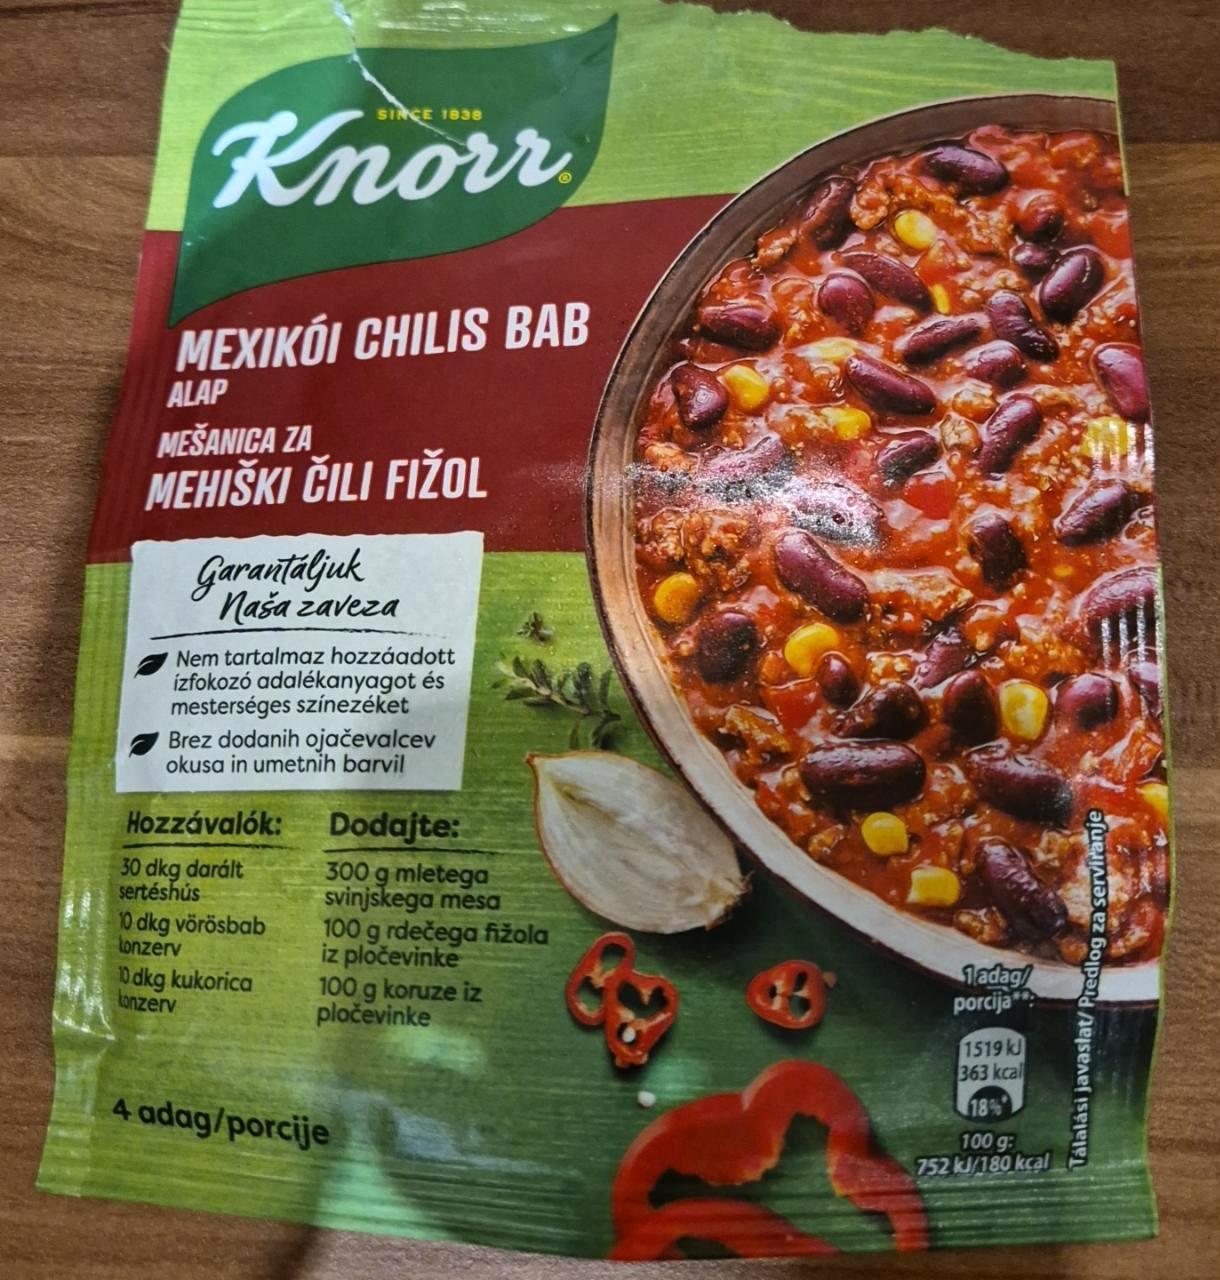 Képek - Mexikói chilis bab Knorr